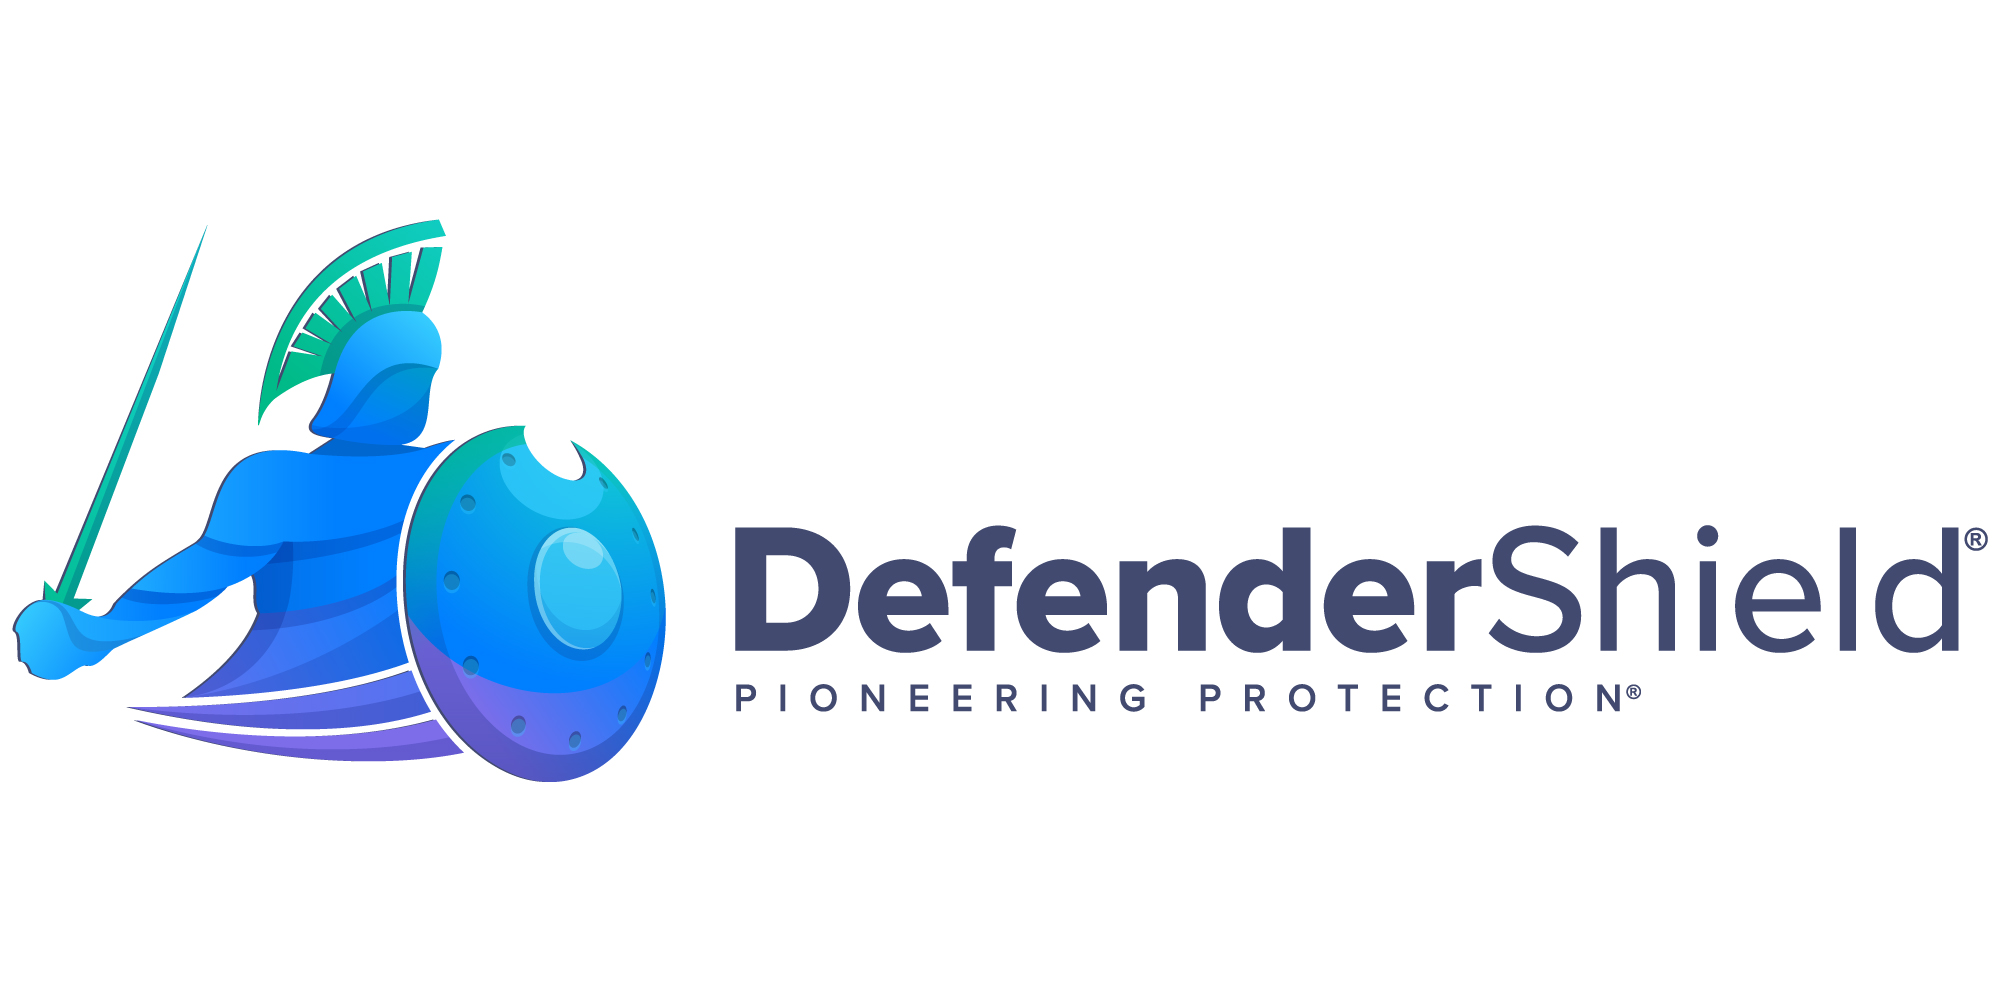 www.defendershield.com